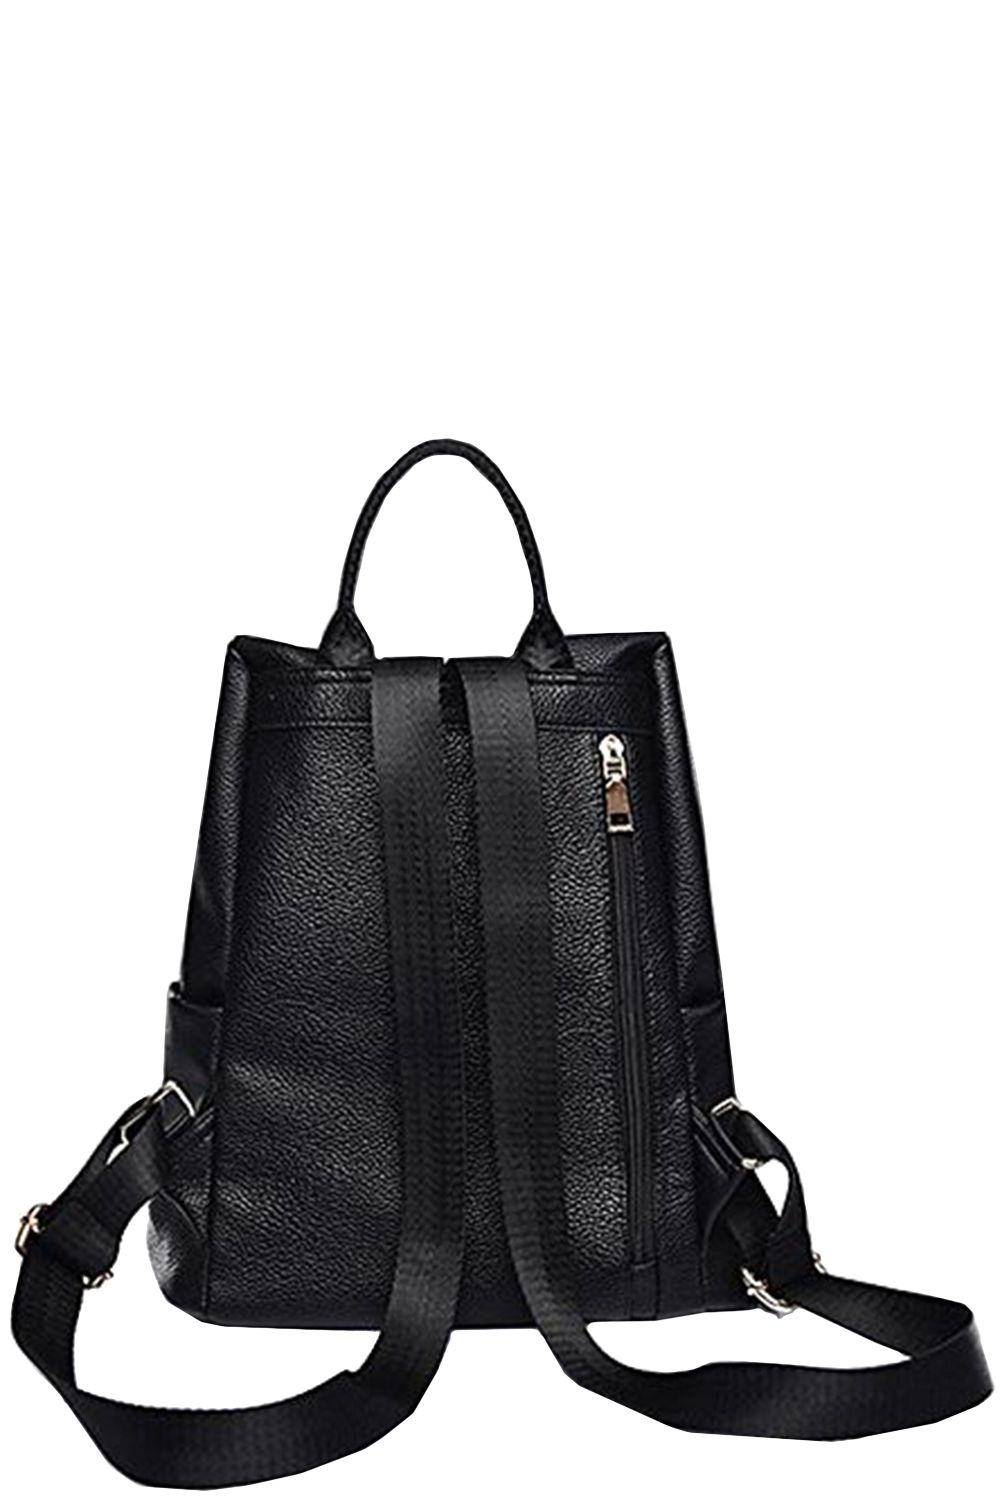 Рюкзак Multibrand, размер UNI, цвет черный 1742-black - фото 3